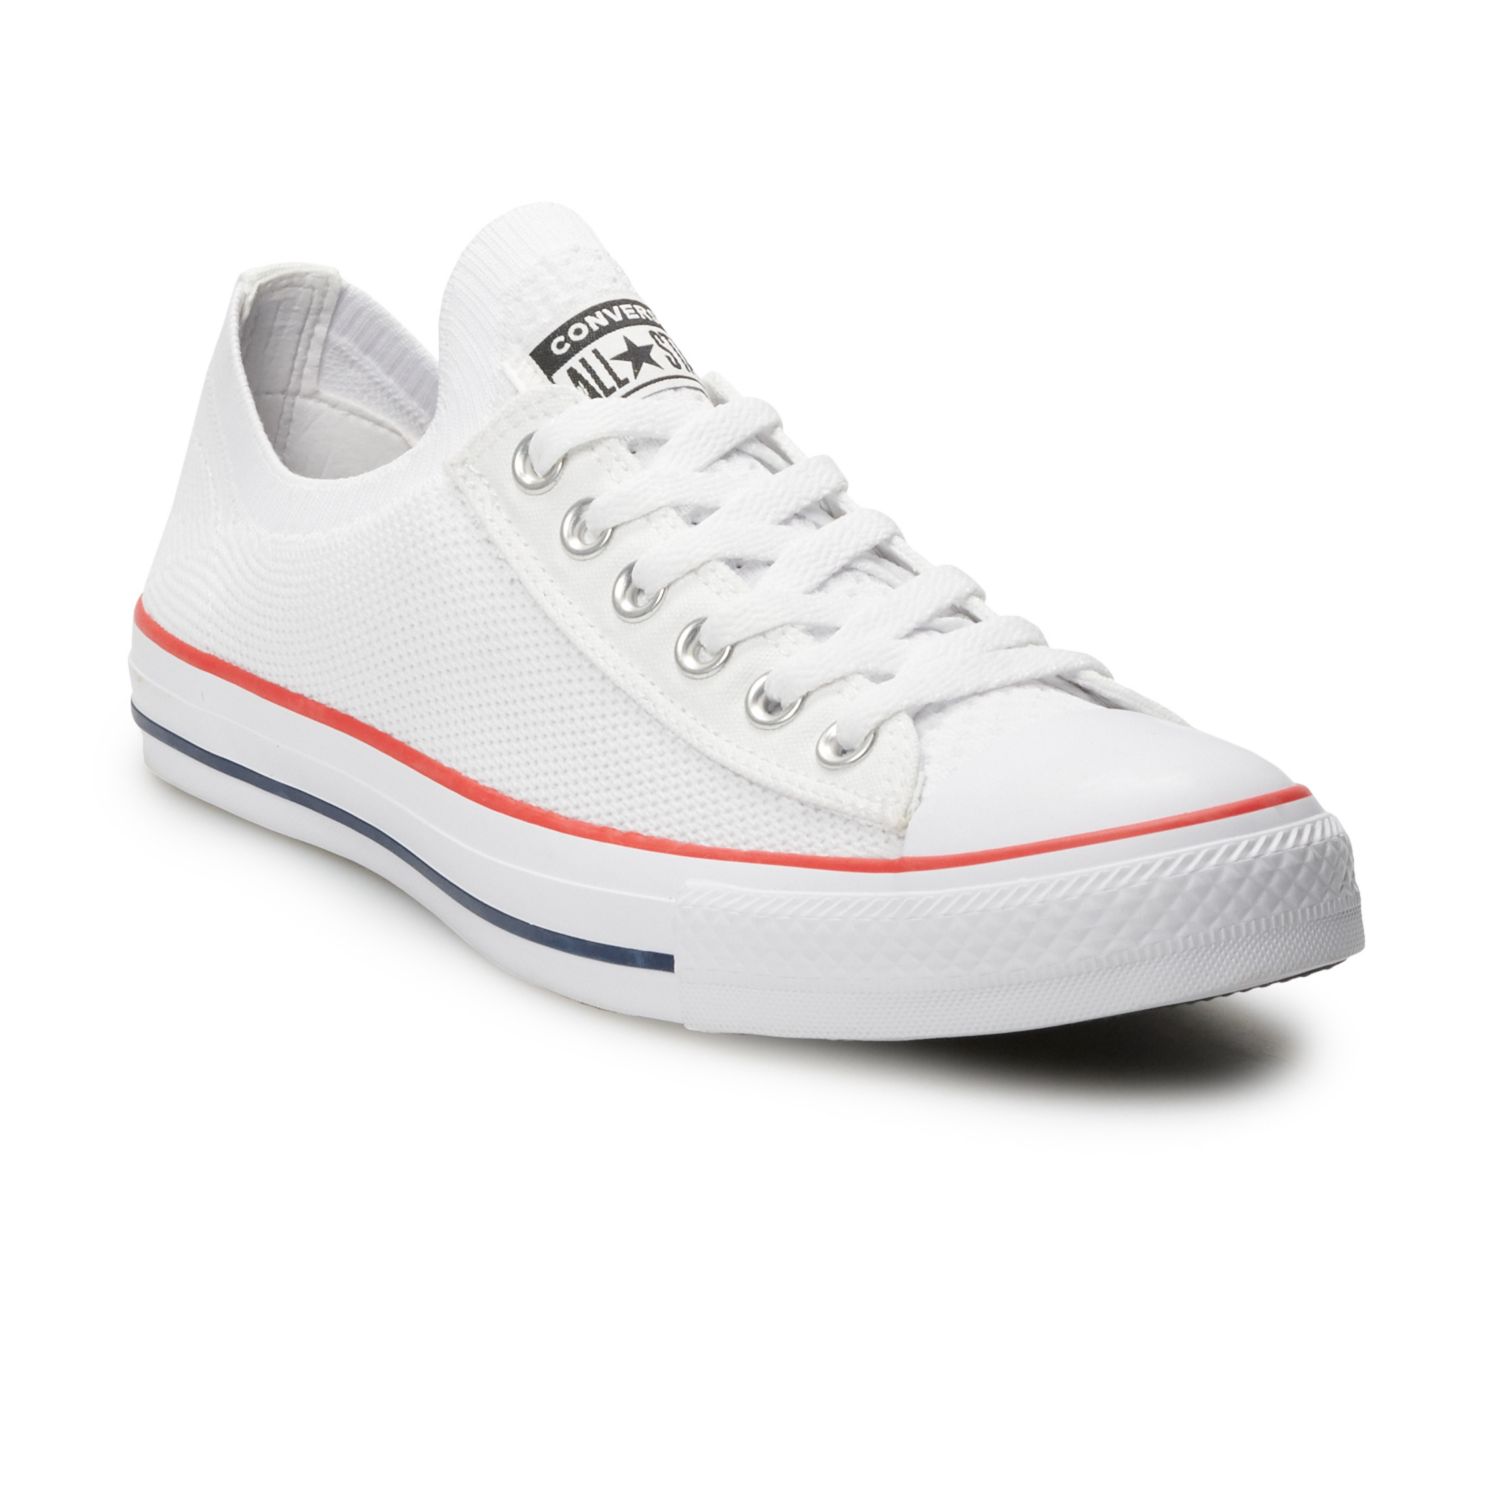 white converse size 5.5